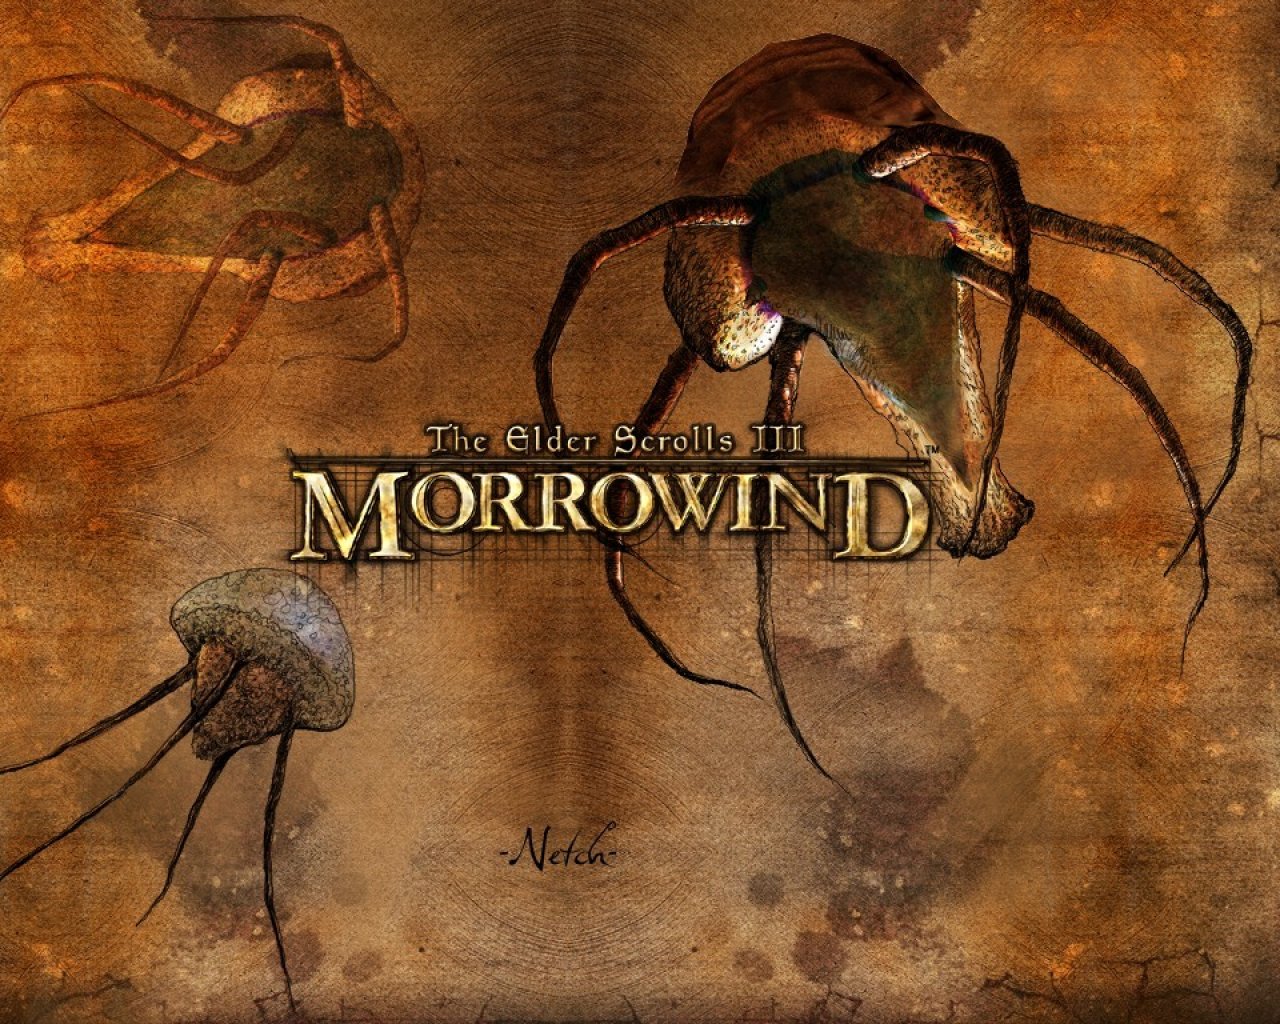 the elder scrolls iii: morrowind, video game